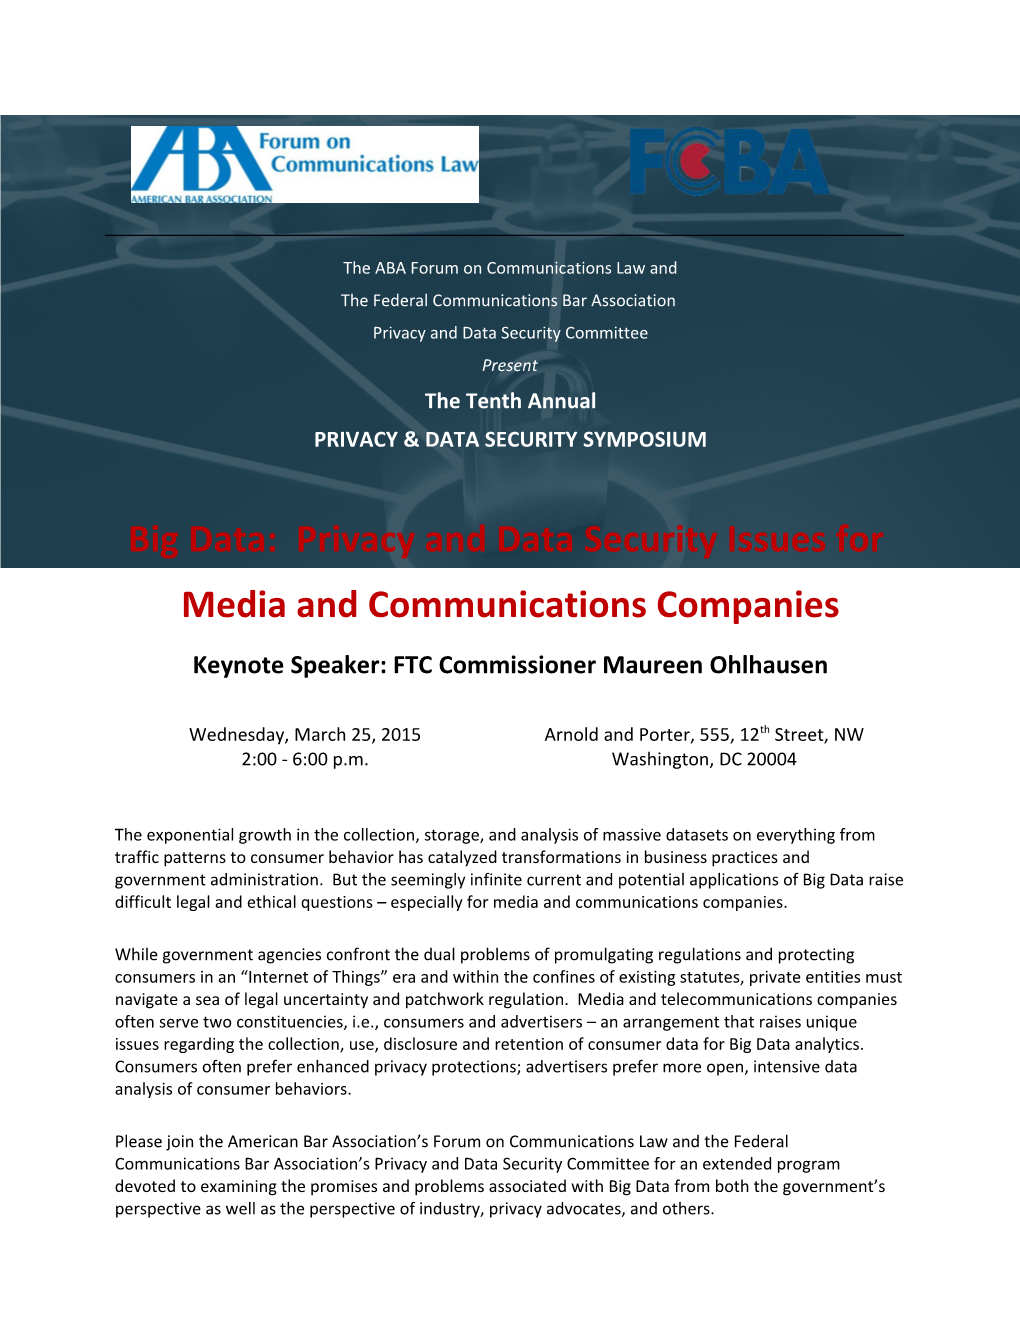 The Federal Communications Bar Association